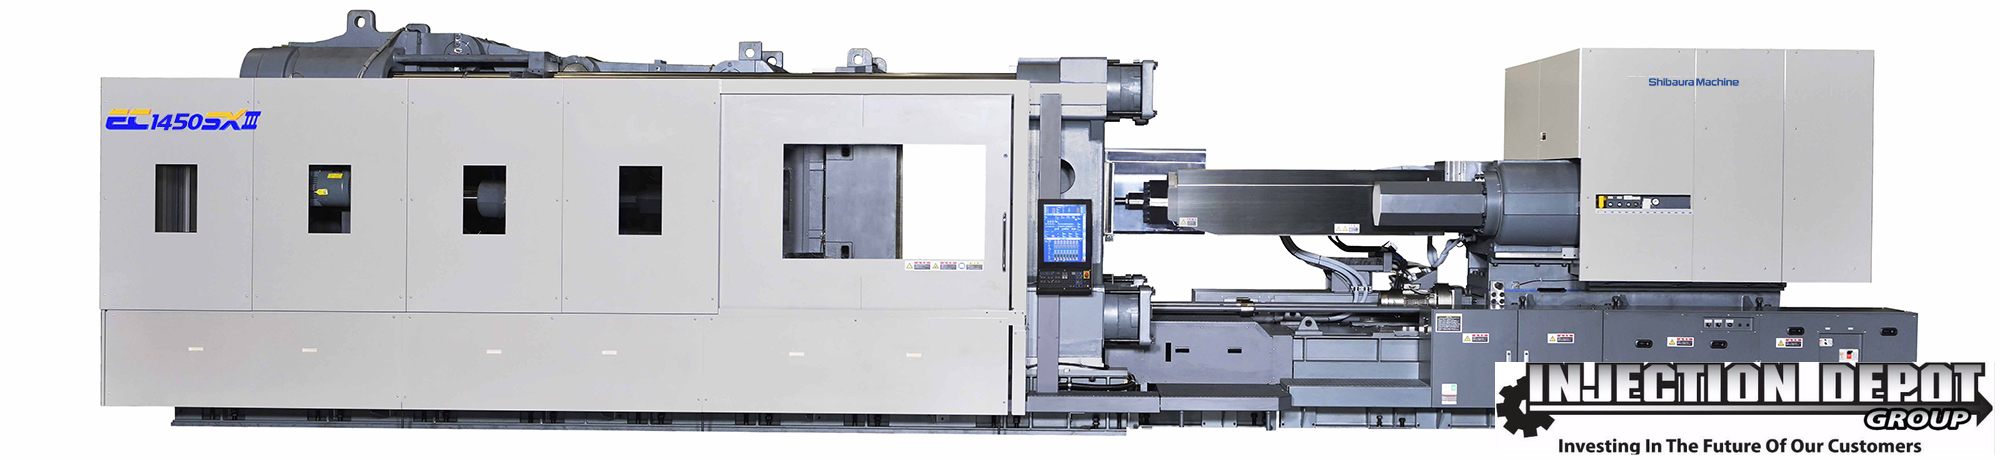 Shibaura Machine EC1450SXIIIV70-i155 B Horizontal Injection Moulding Machines | INJECTION DEPOT GROUP